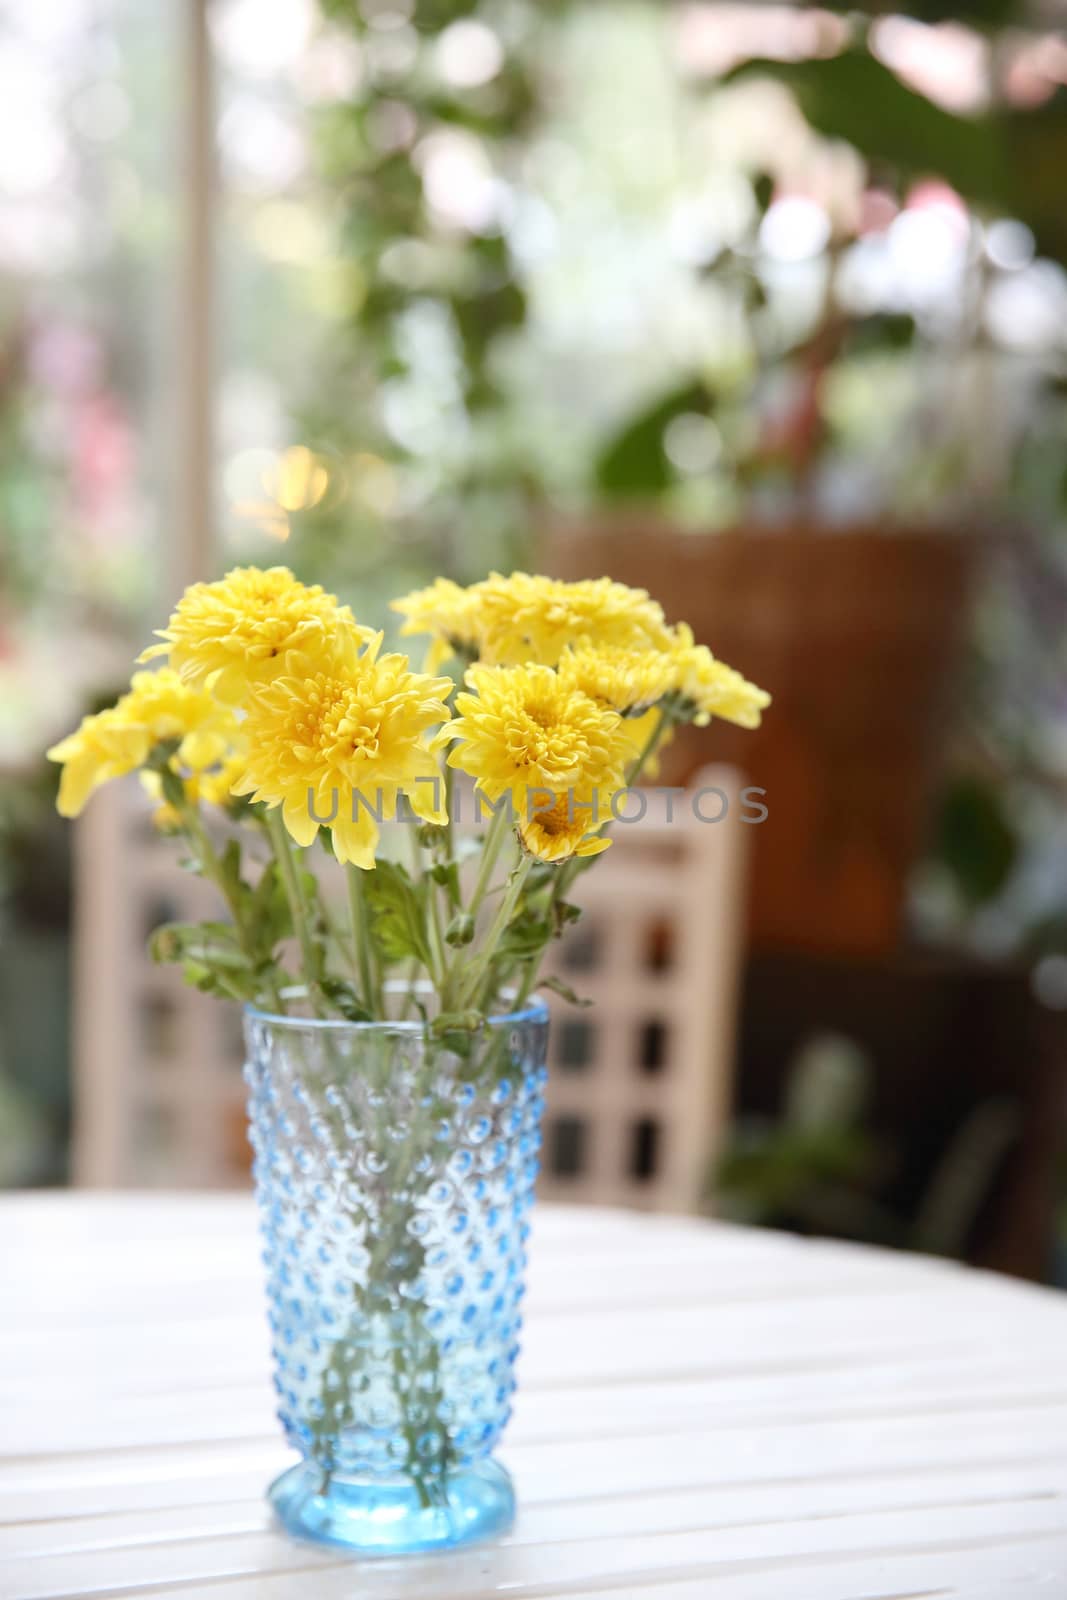 yellow flower in jar by piyato